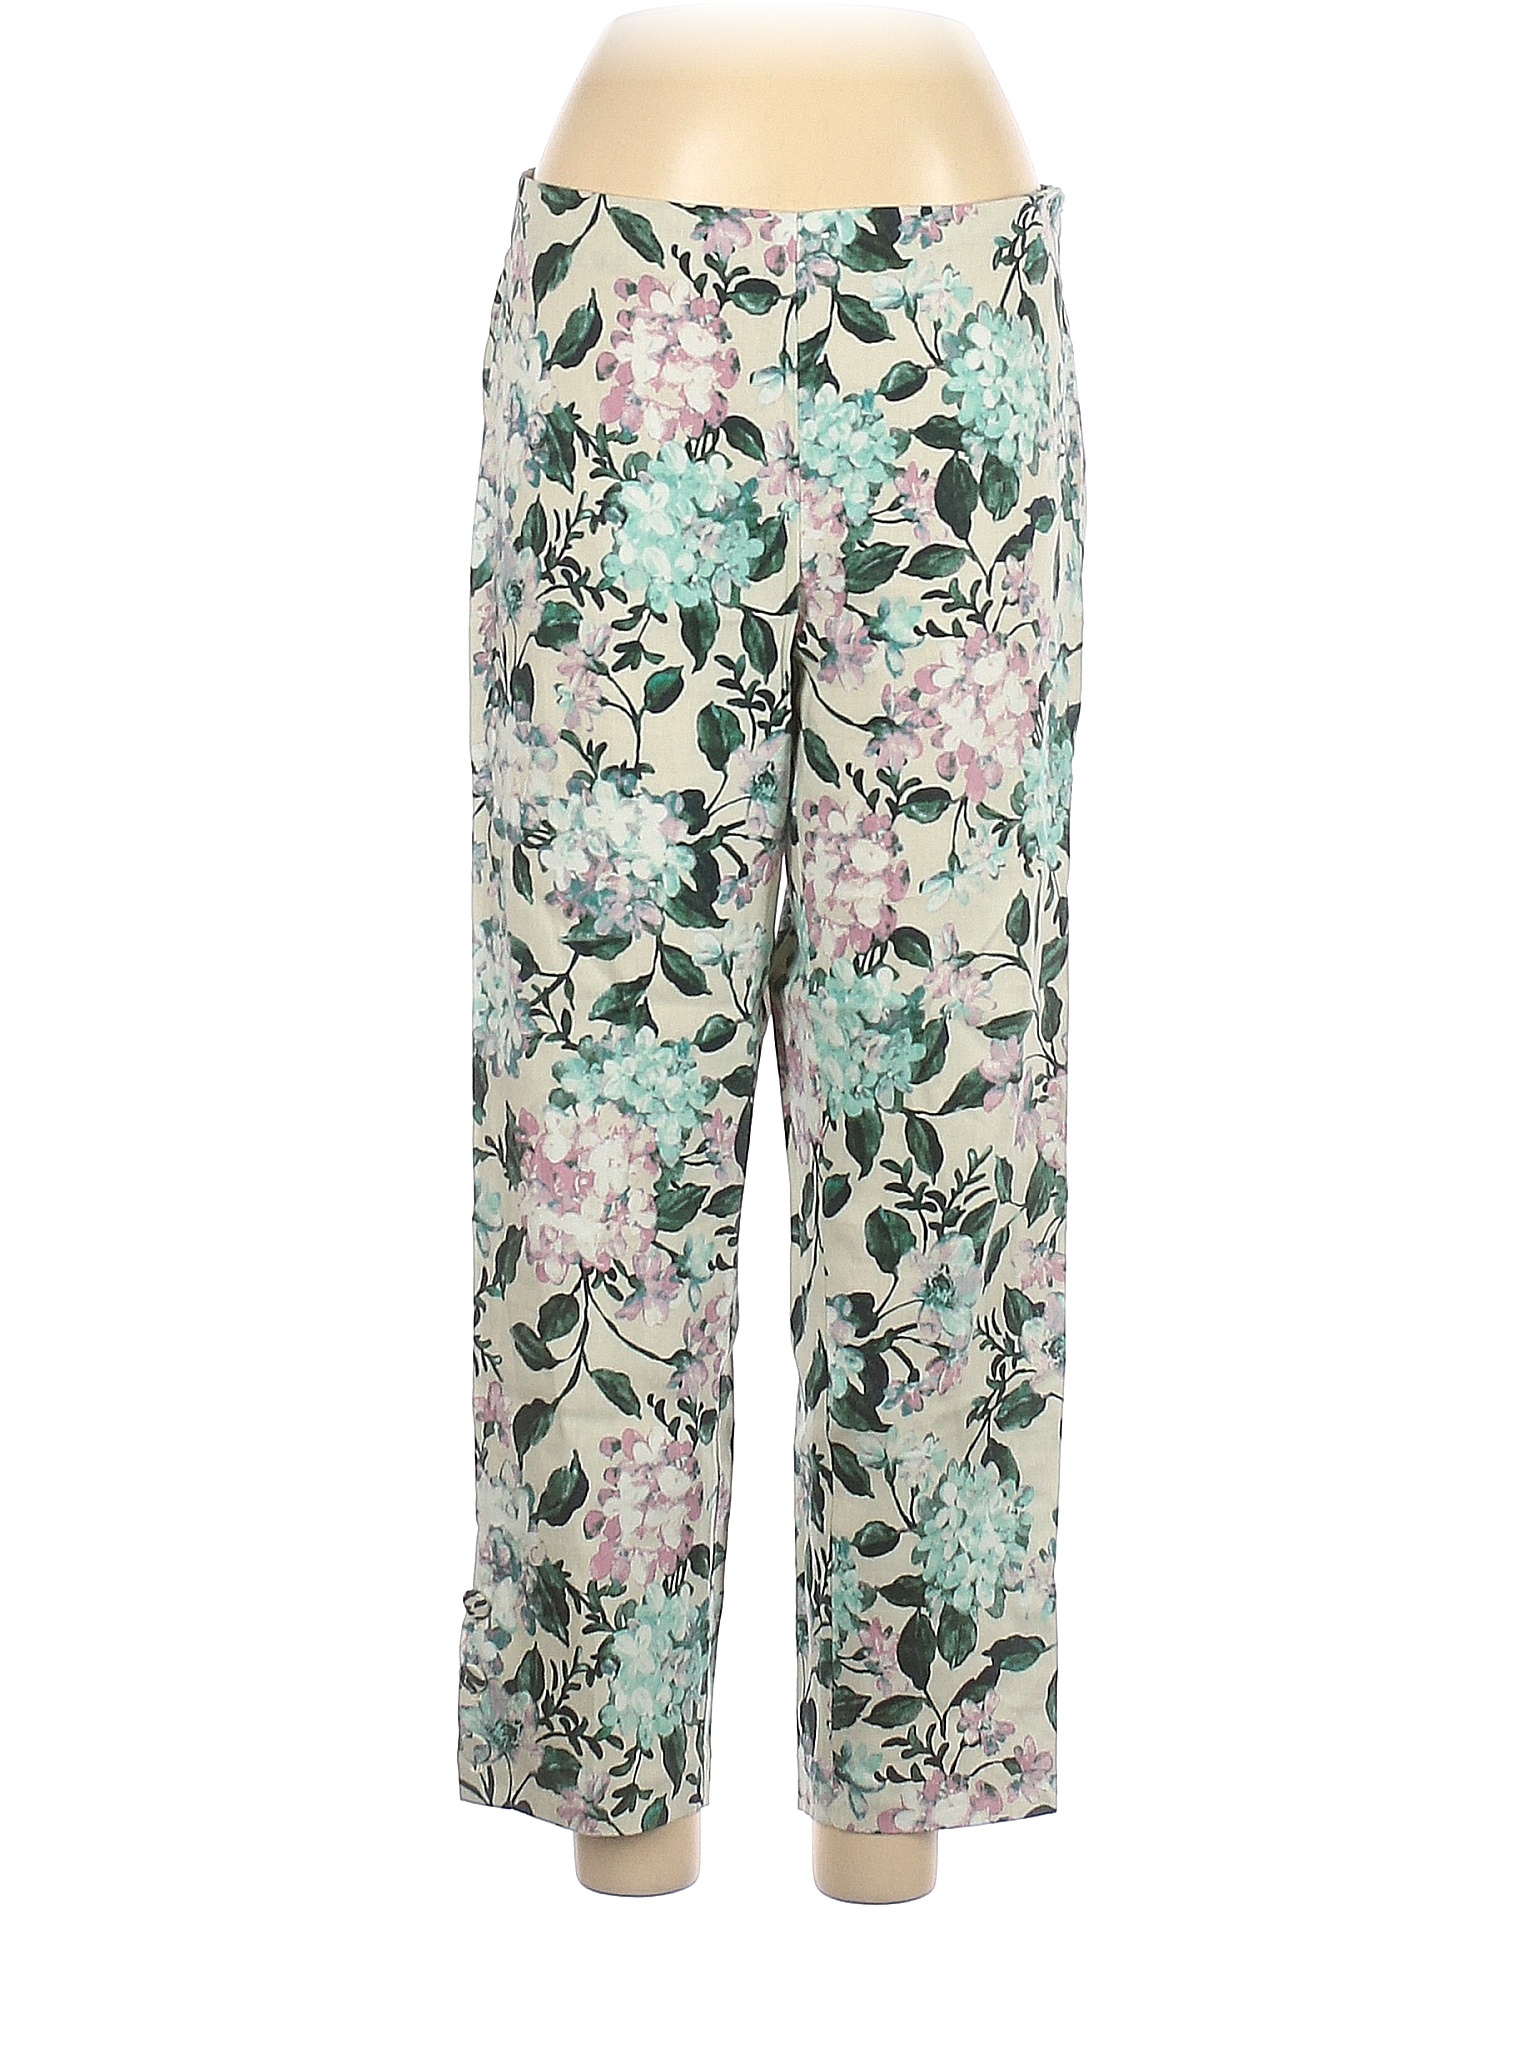 J.Jill Floral Multi Color Green Linen Pants Size M - 78% off | thredUP